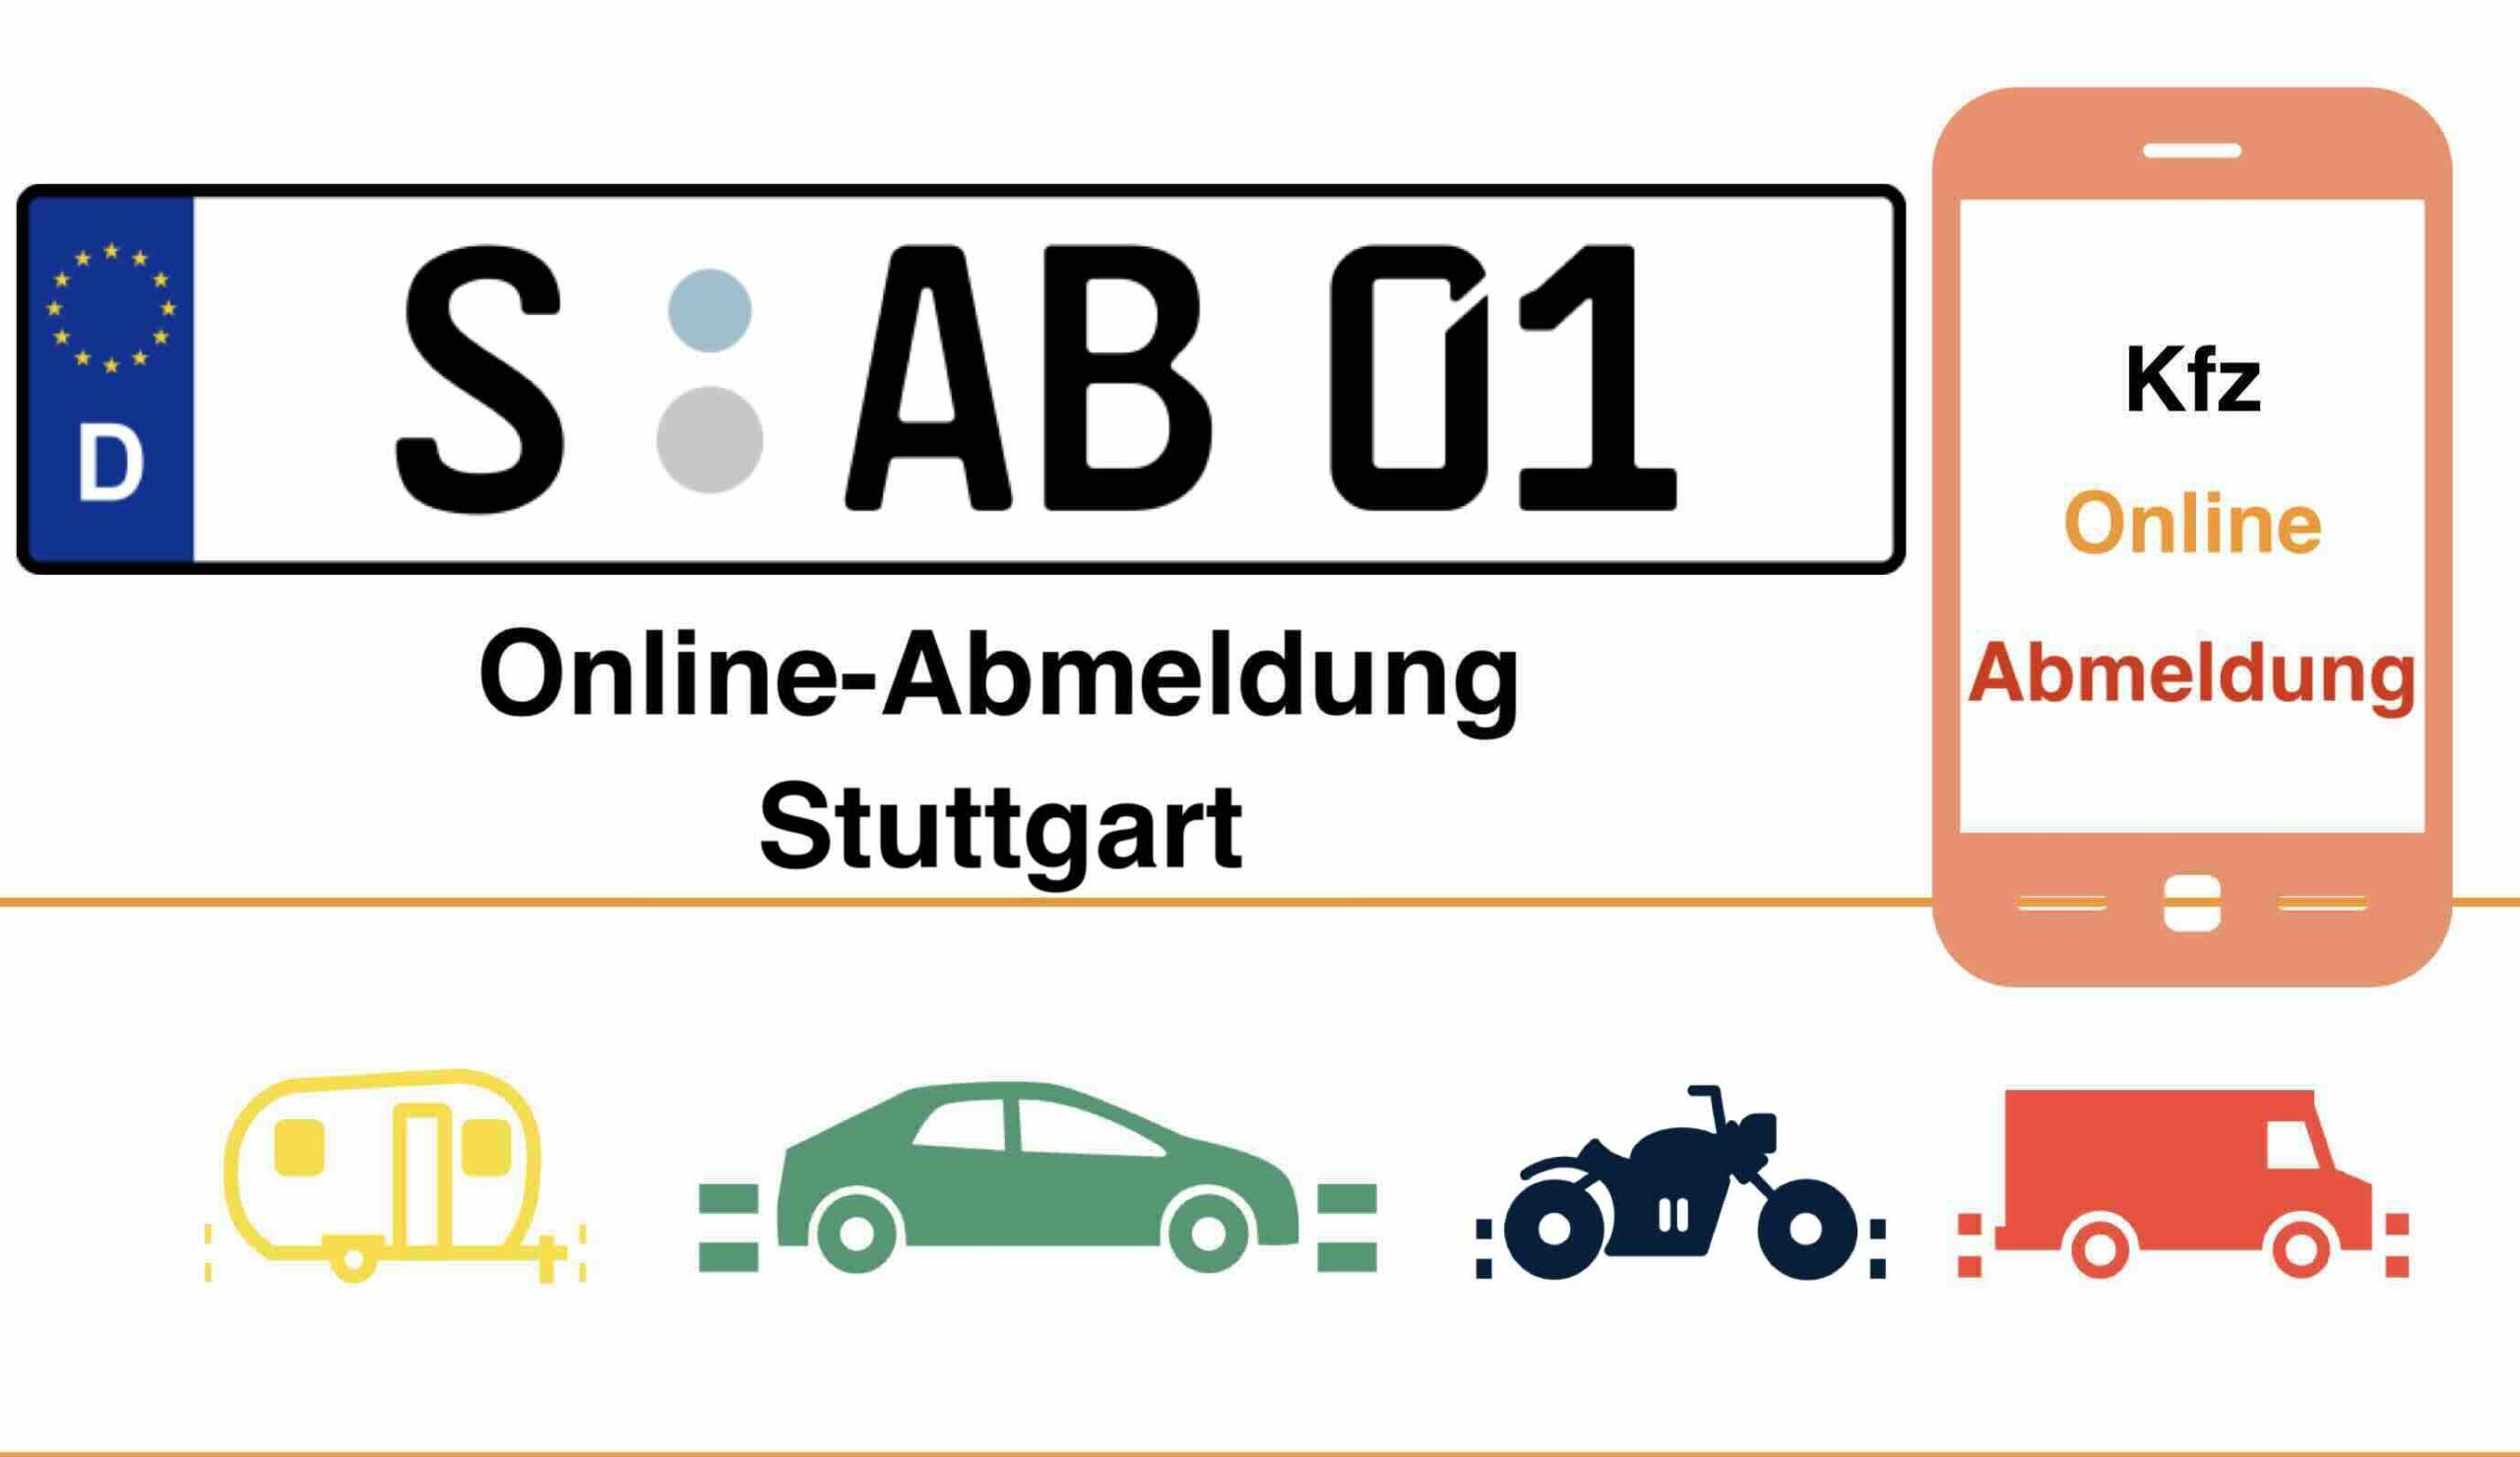 Online-Abmeldung in Stuttgart 